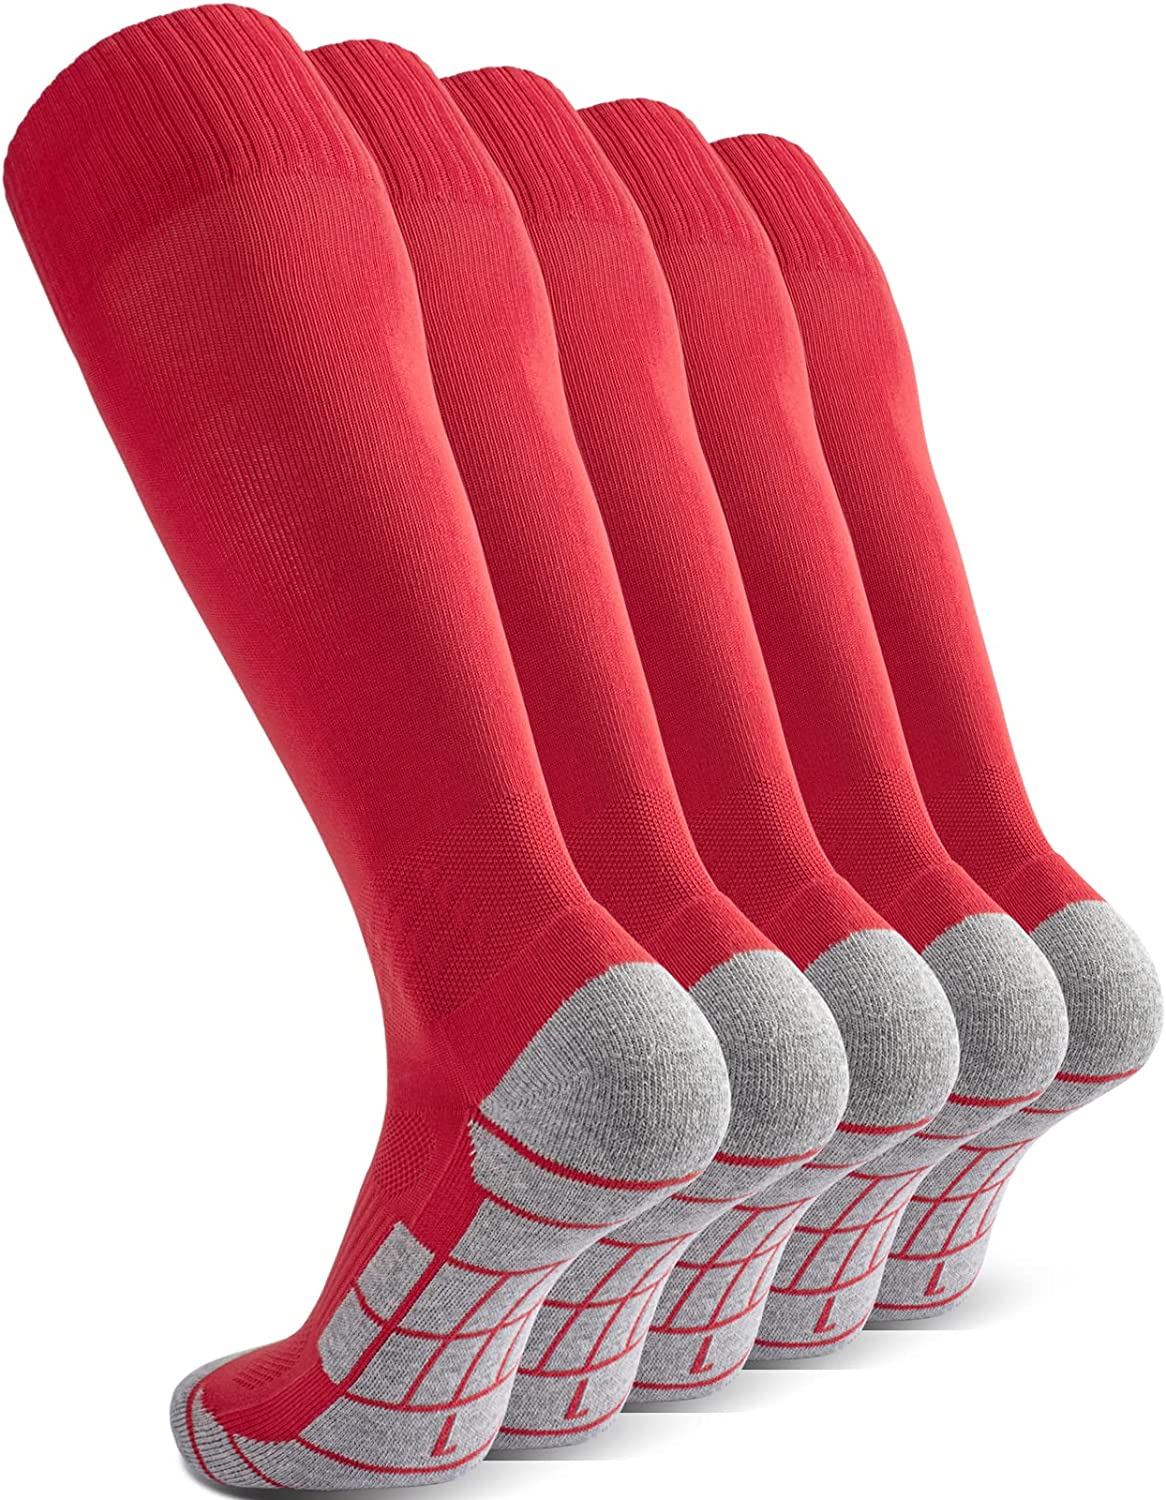 Team Sport Knee High Socks for Adult Youth Kids CWVLC Soccer Socks 1/3/5 pairs 